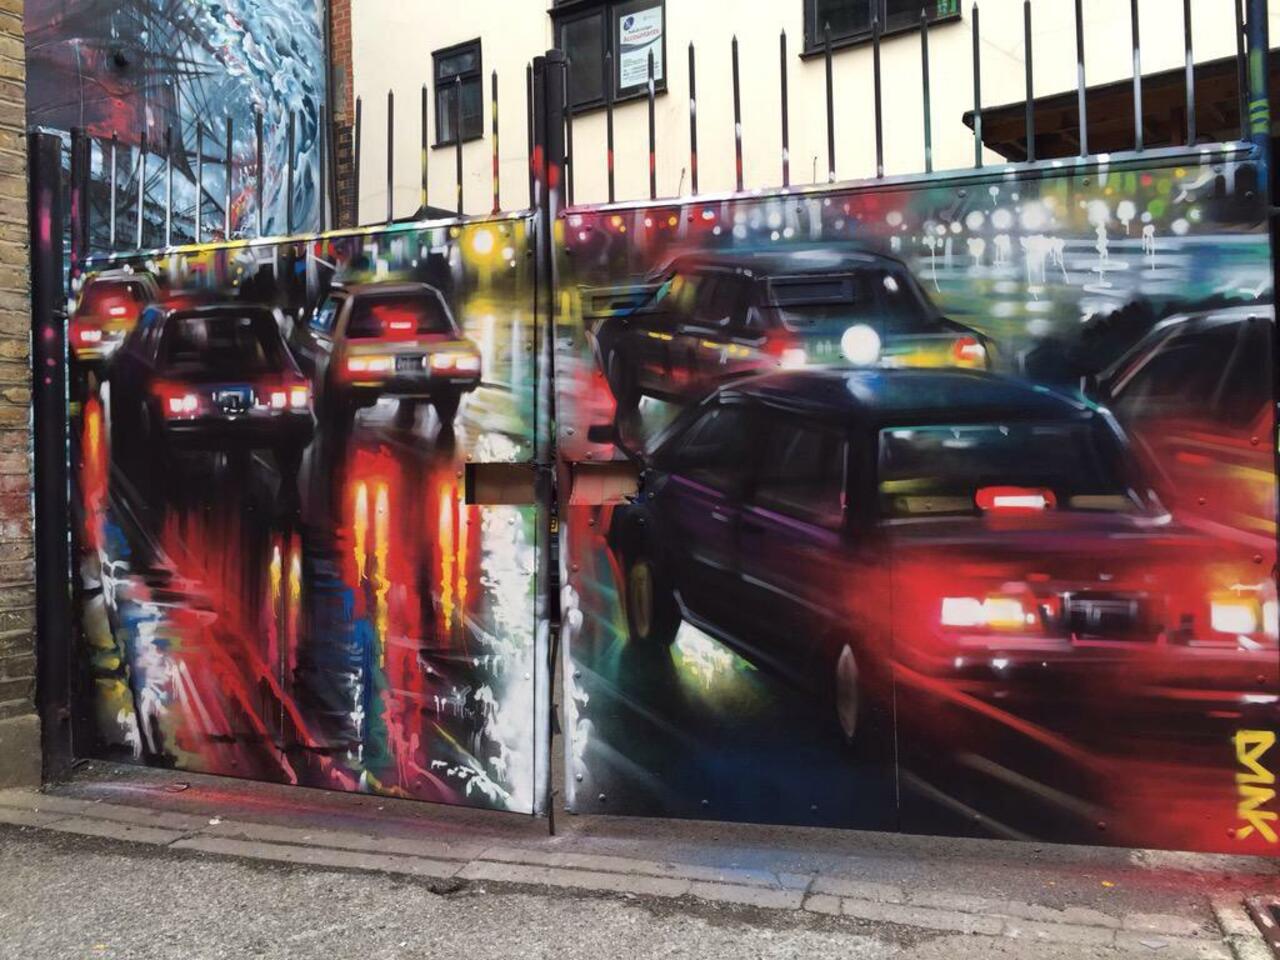 RT @Trxll_Squad: New Street Art by DanKitchener in Brick Lane London 

#art #graffiti #mural #streetart http://t.co/nWs3WYYqgf